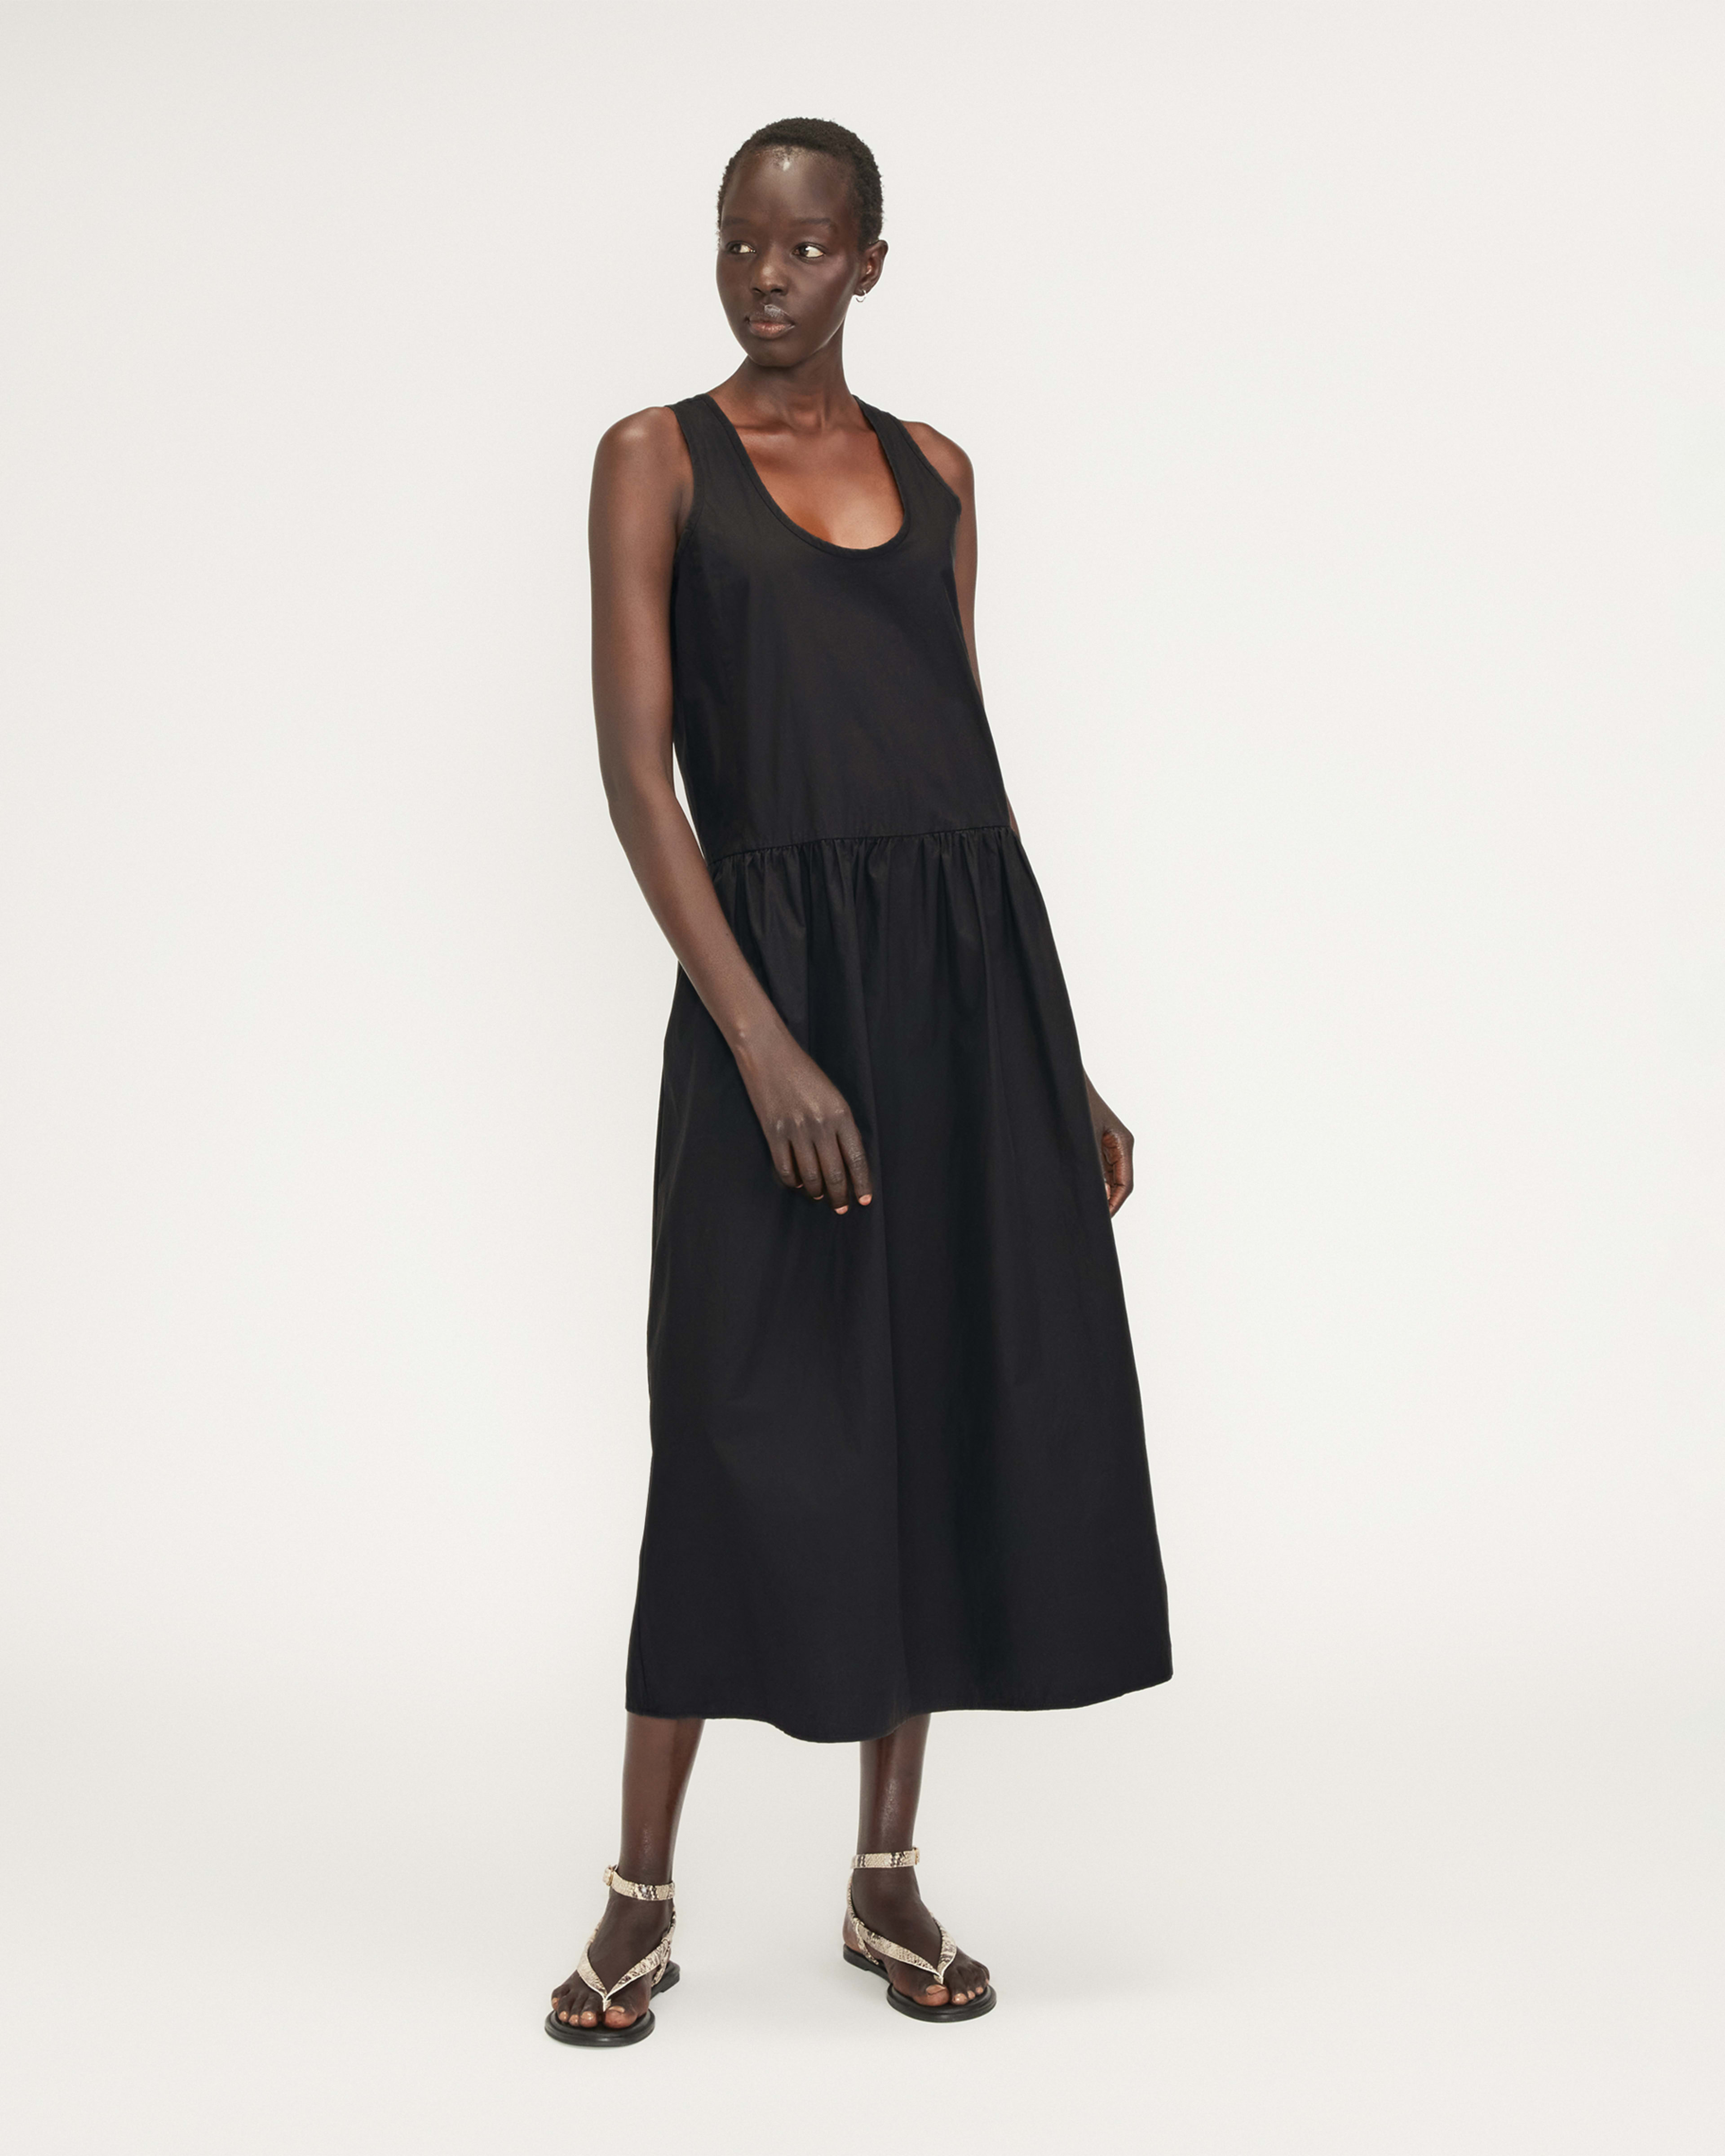 21 Best Linen Dresses to Wear All Summer: Madewell, Everlane & More